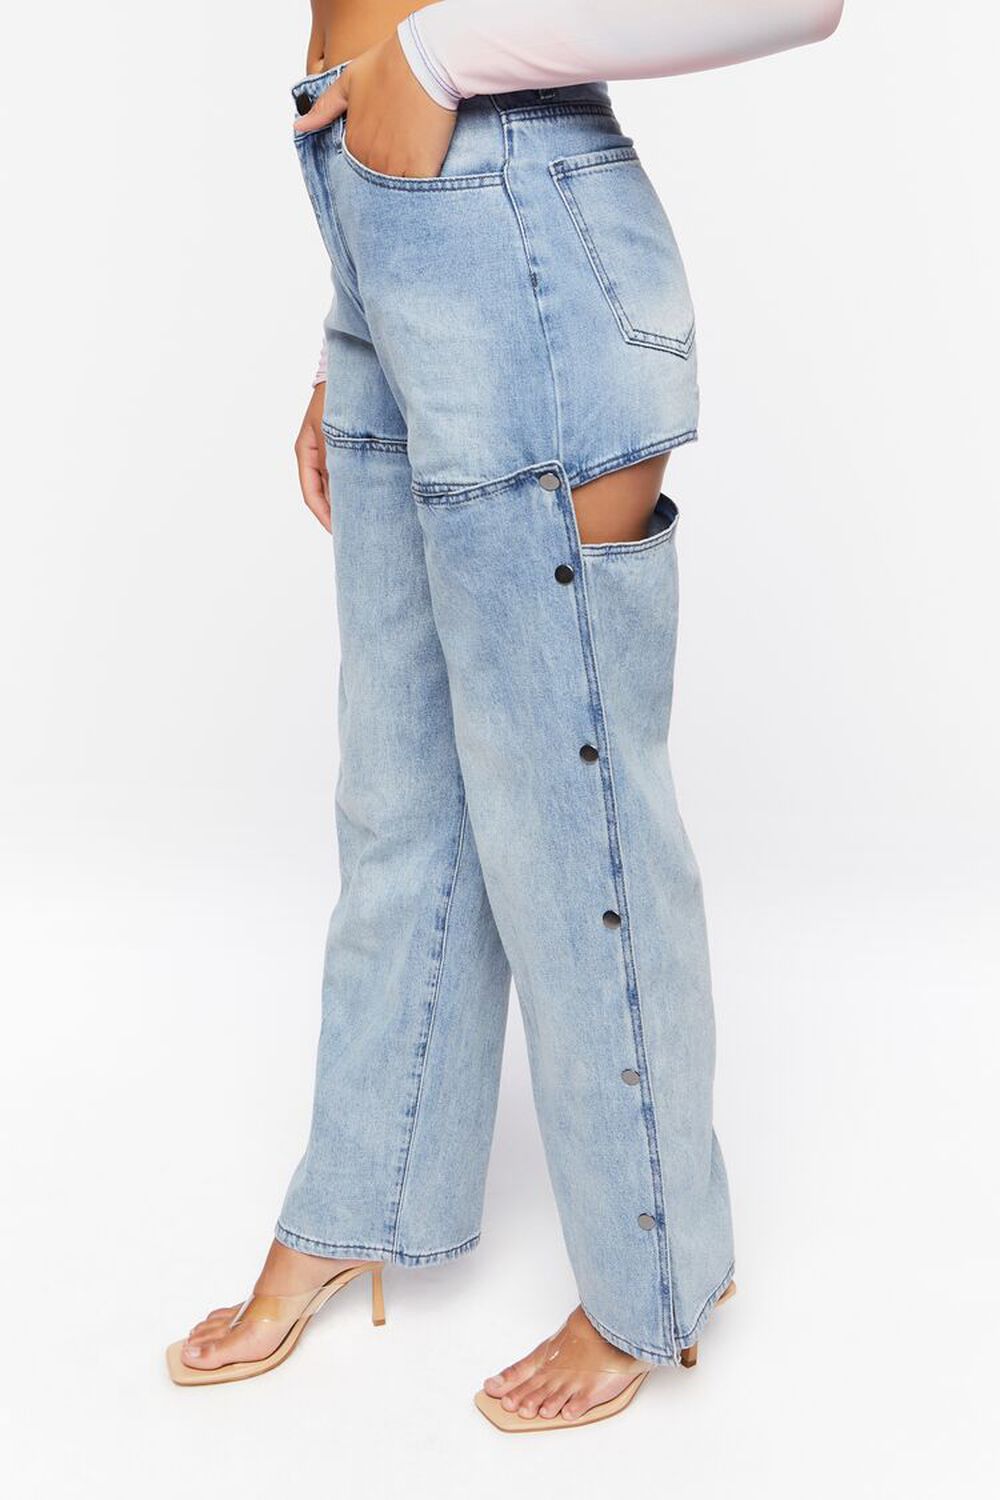 MEDIUM DENIM Mid-Rise Cutout Jeans, image 3